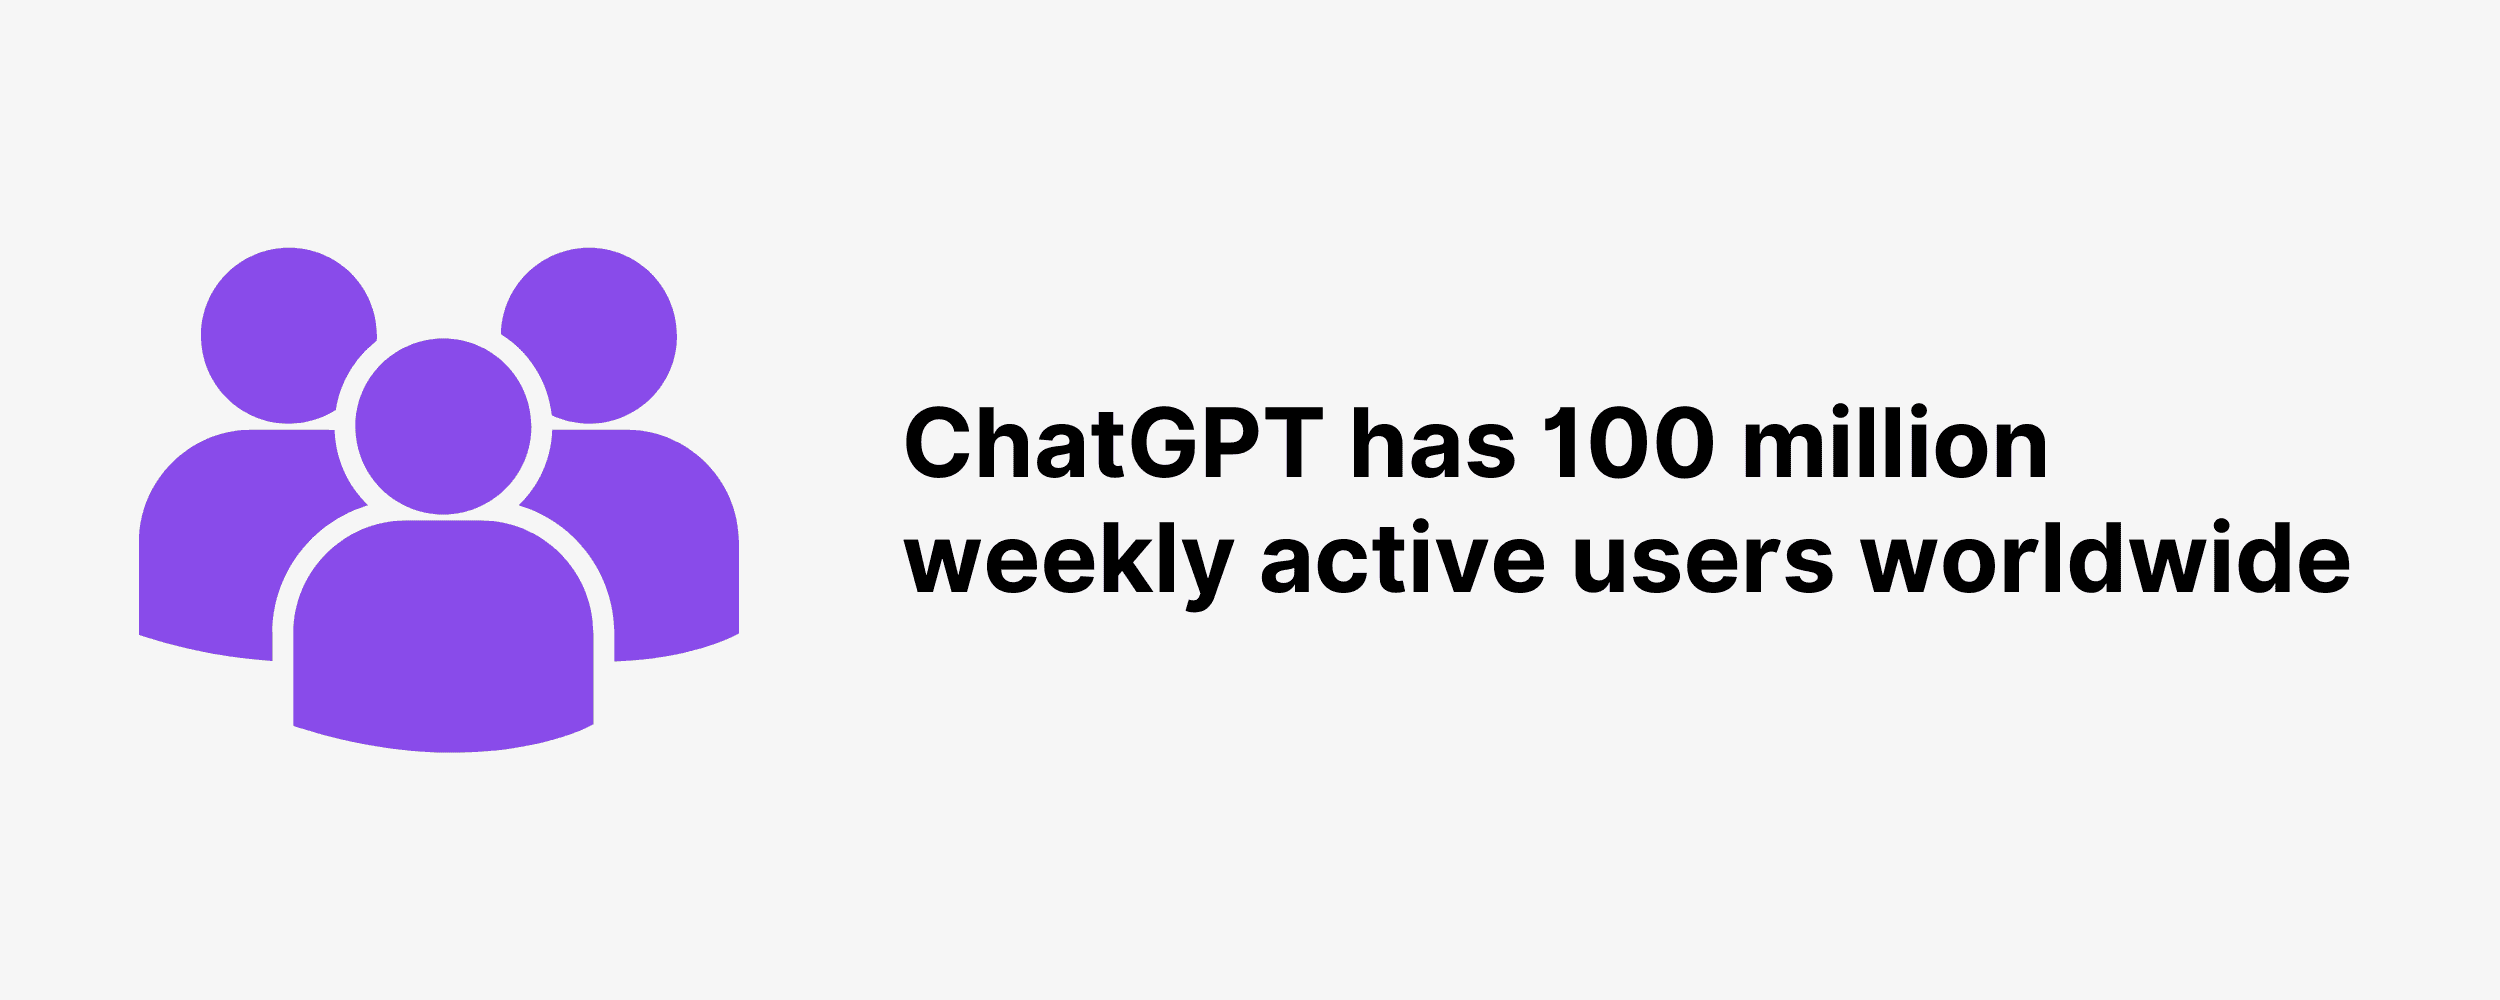 ChatGPT has 100 million weekly active users worldwide